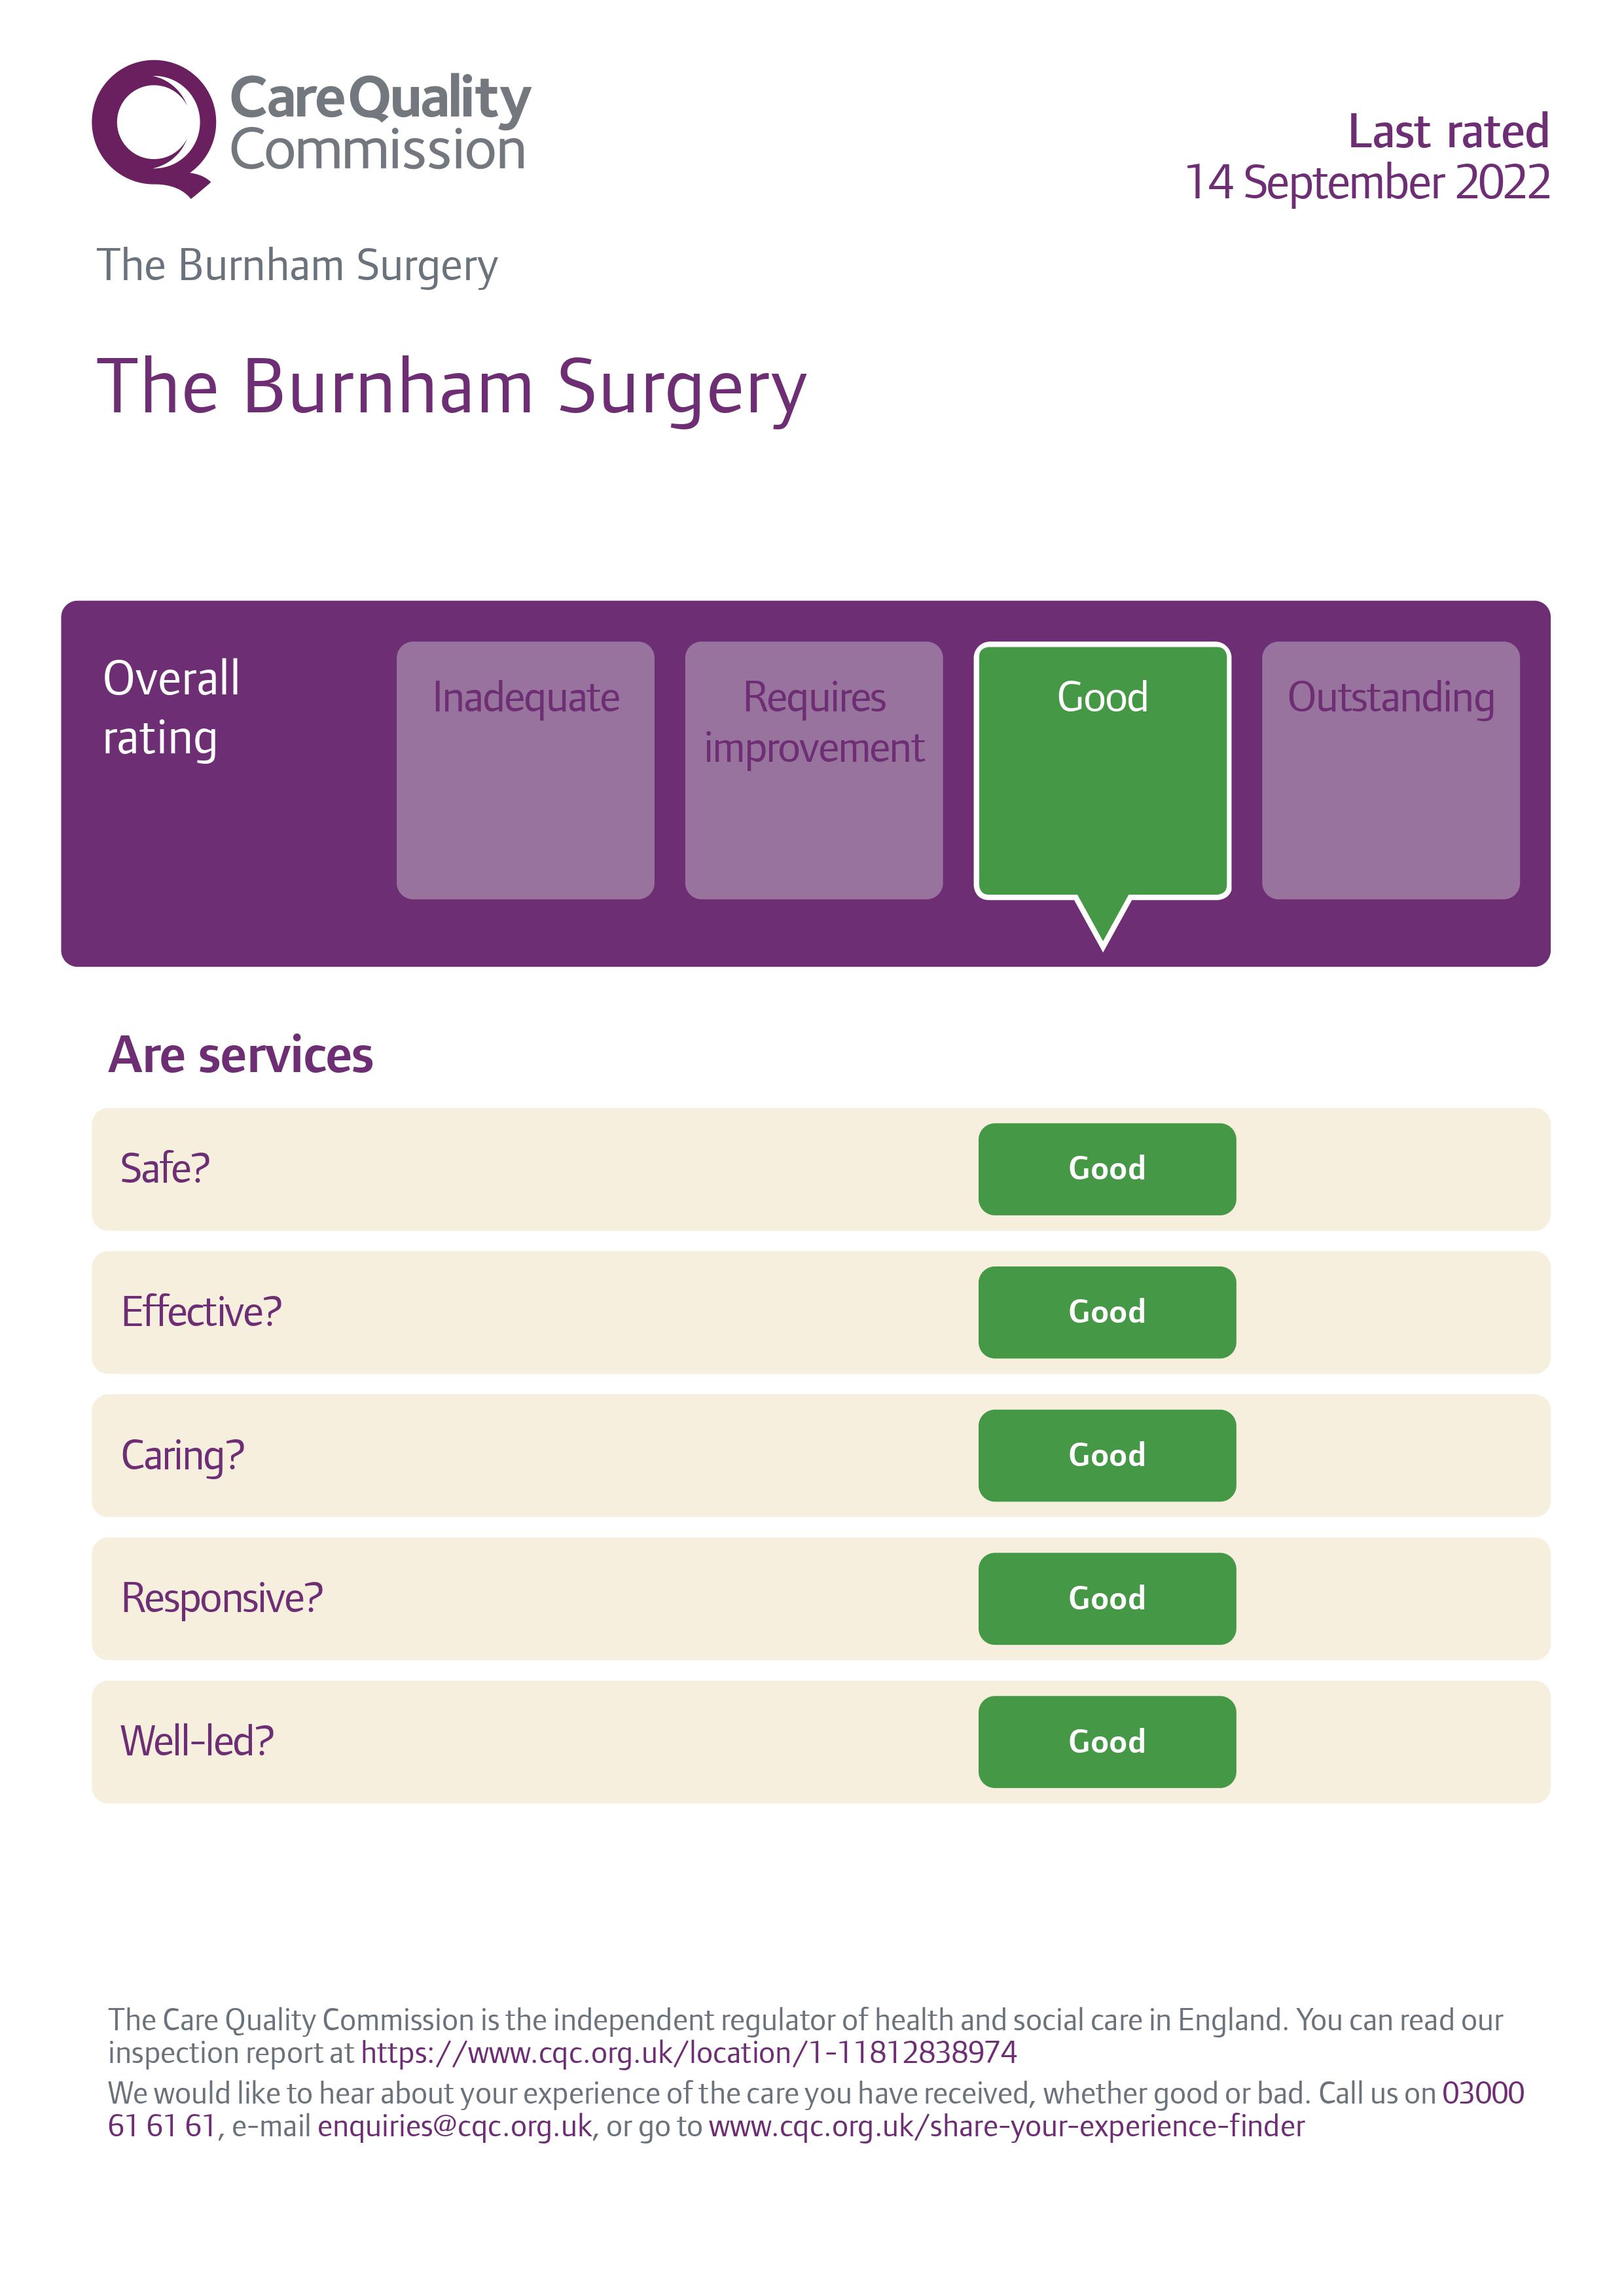 CQC Rating Good Burnham Surgery